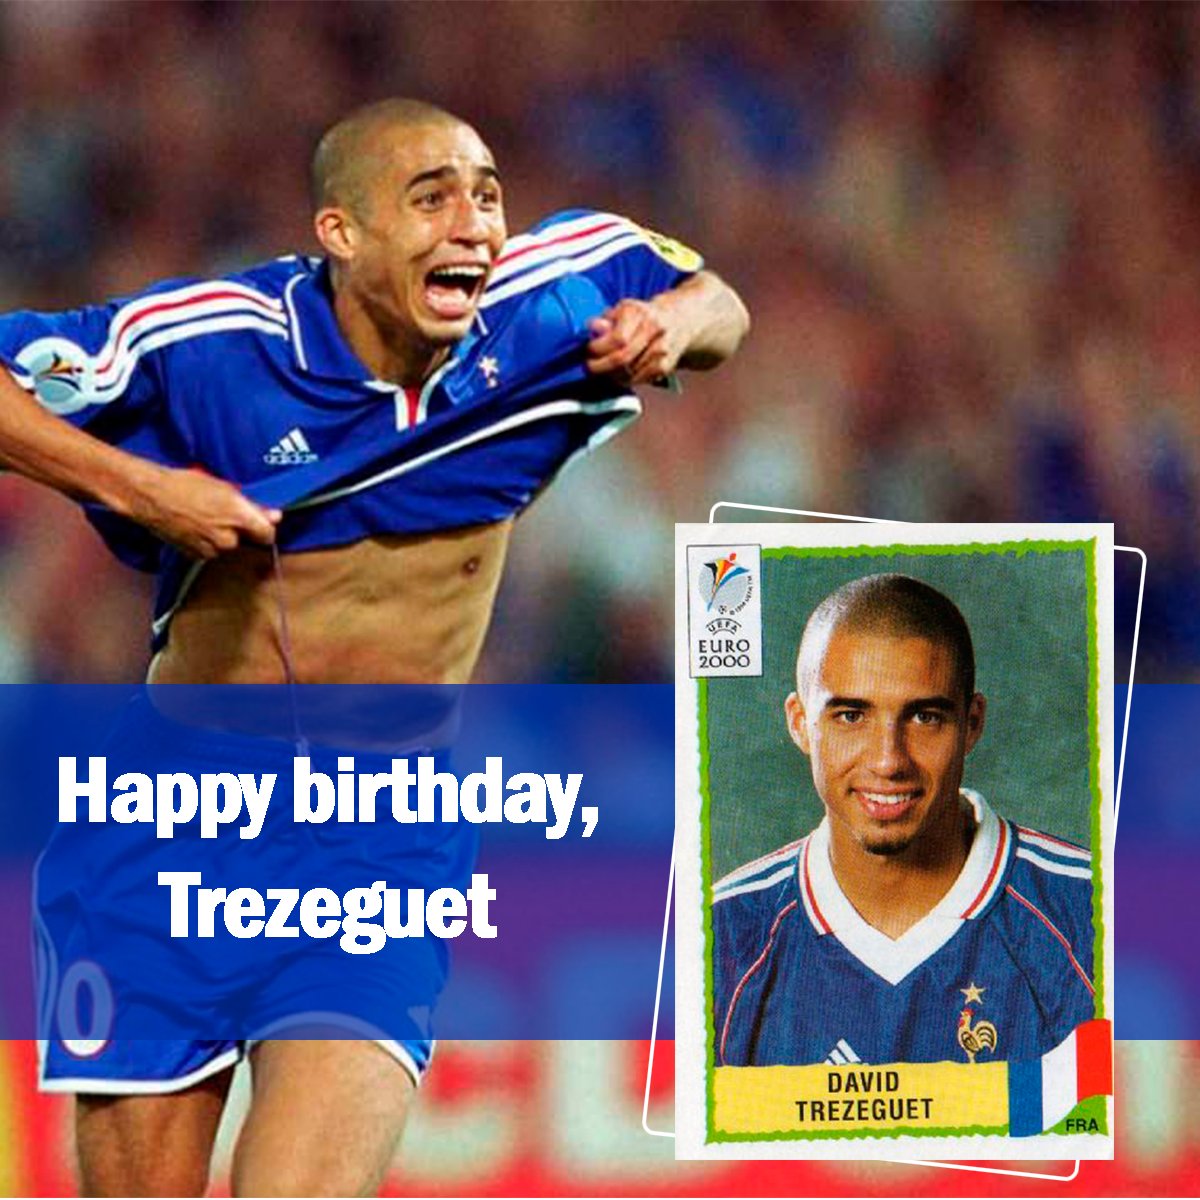 Happy birthday, David Trezeguet! 